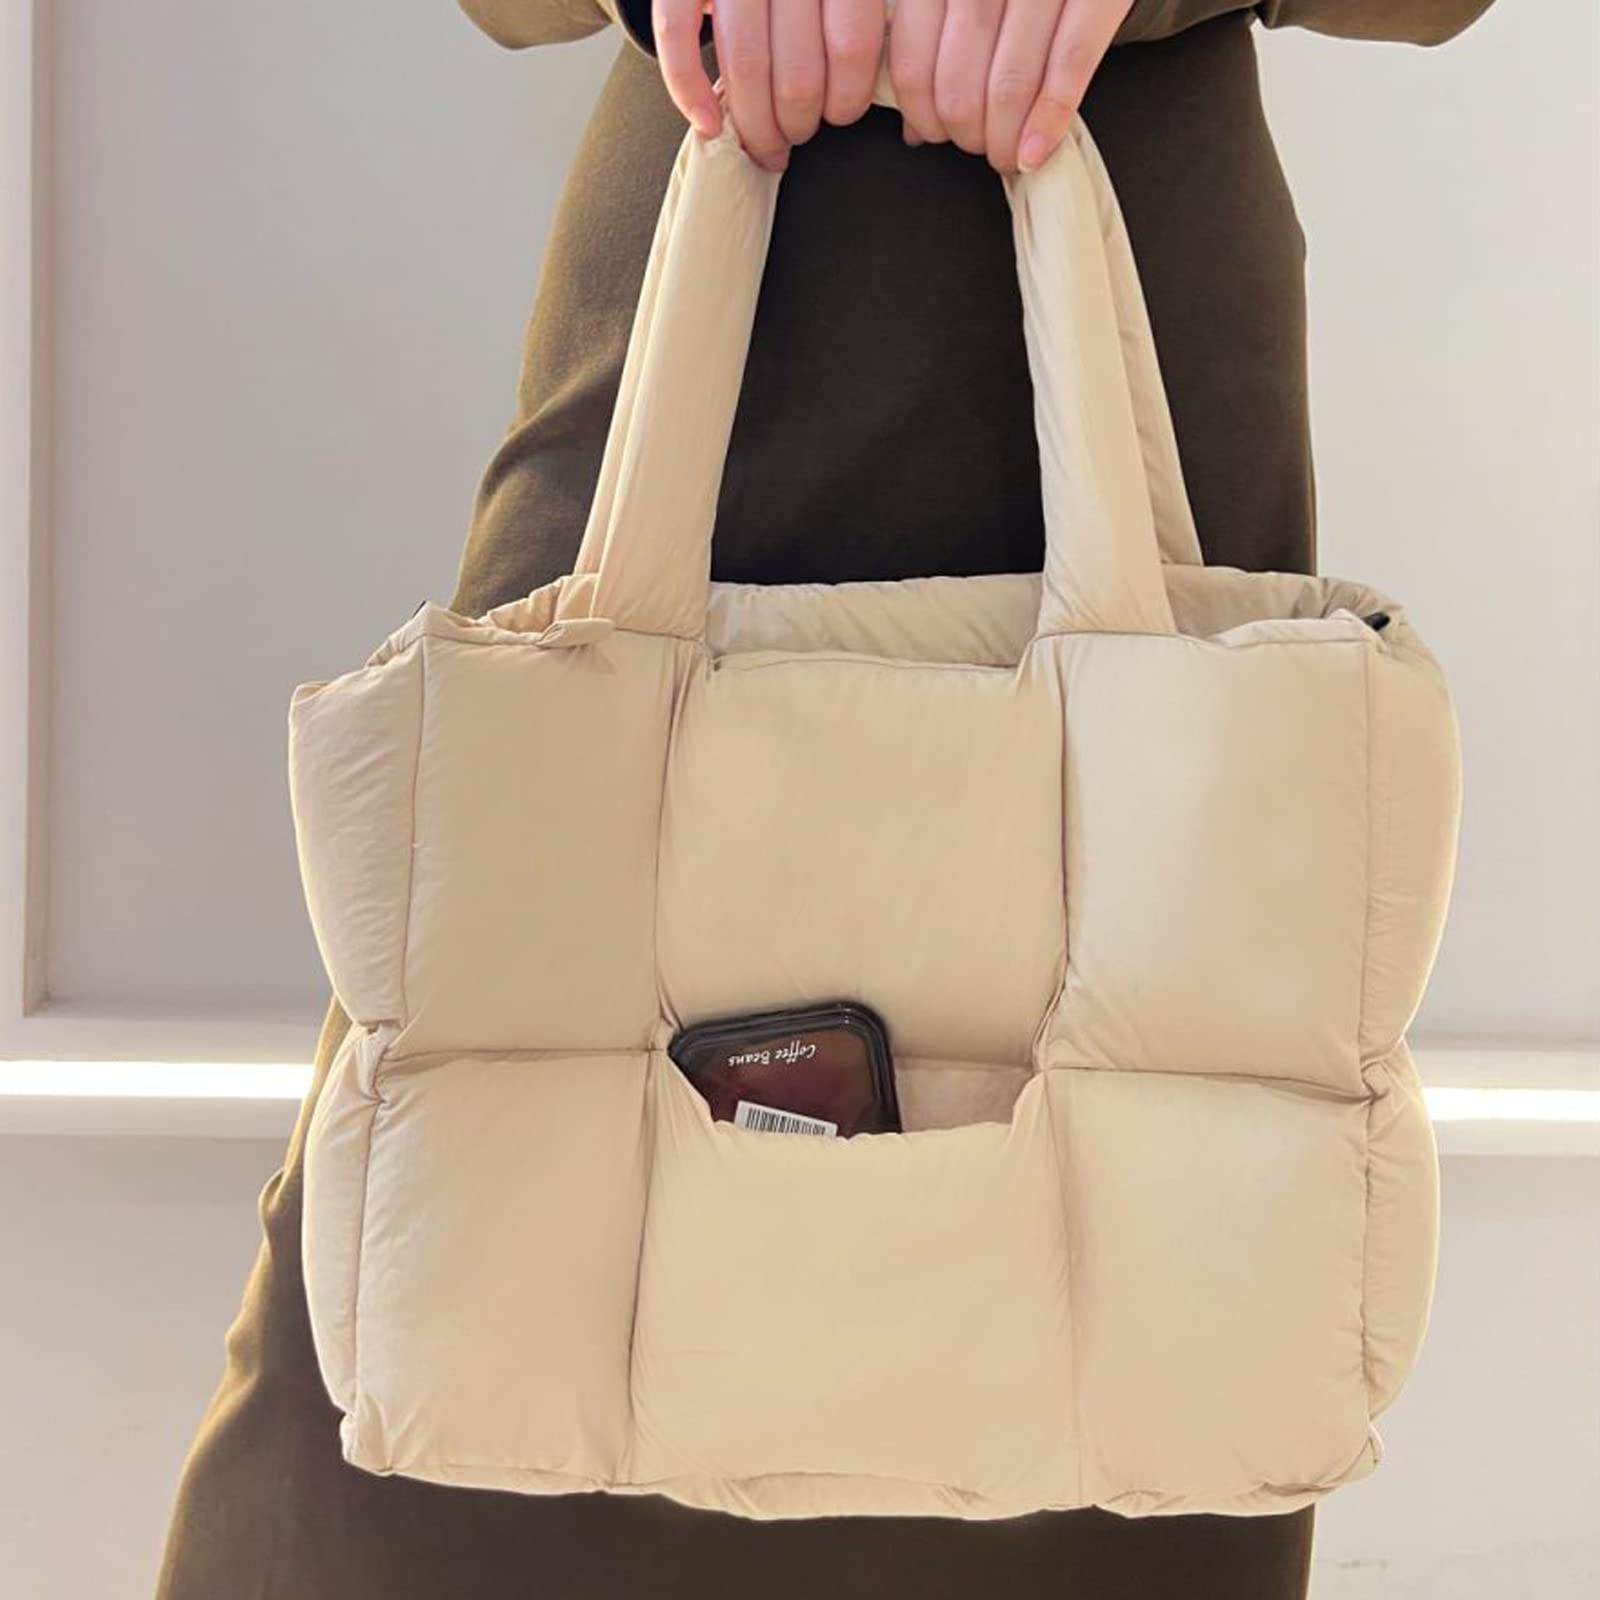 Women Large Puffer Purse Puffy Tote Bags Dupes Light Weight Handmade Nylon Bag Woven Shoulder Handbag